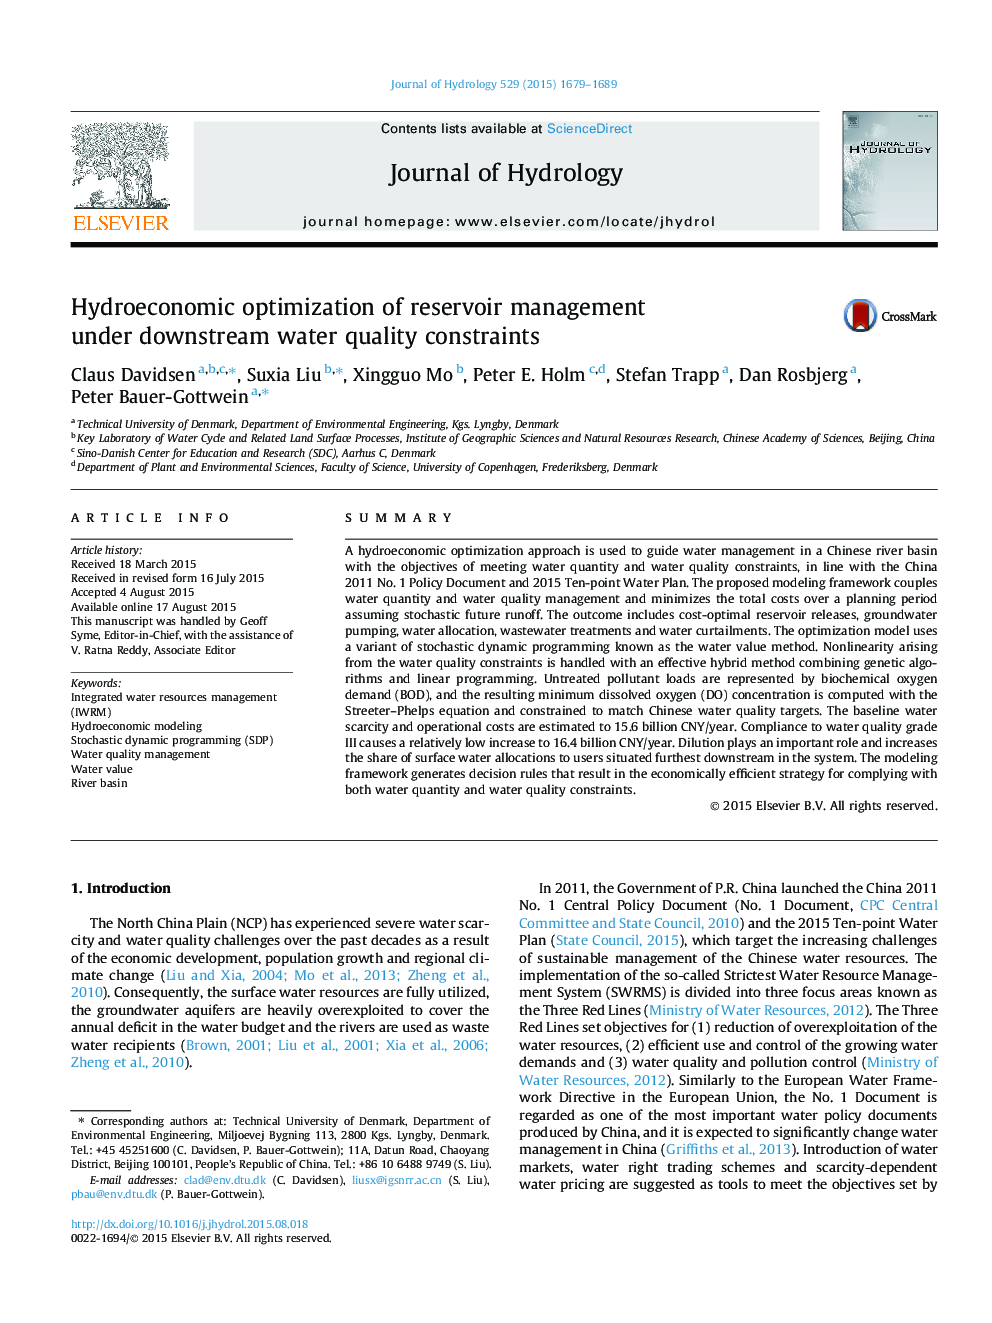 Hydroeconomic optimization of reservoir management under downstream water quality constraints